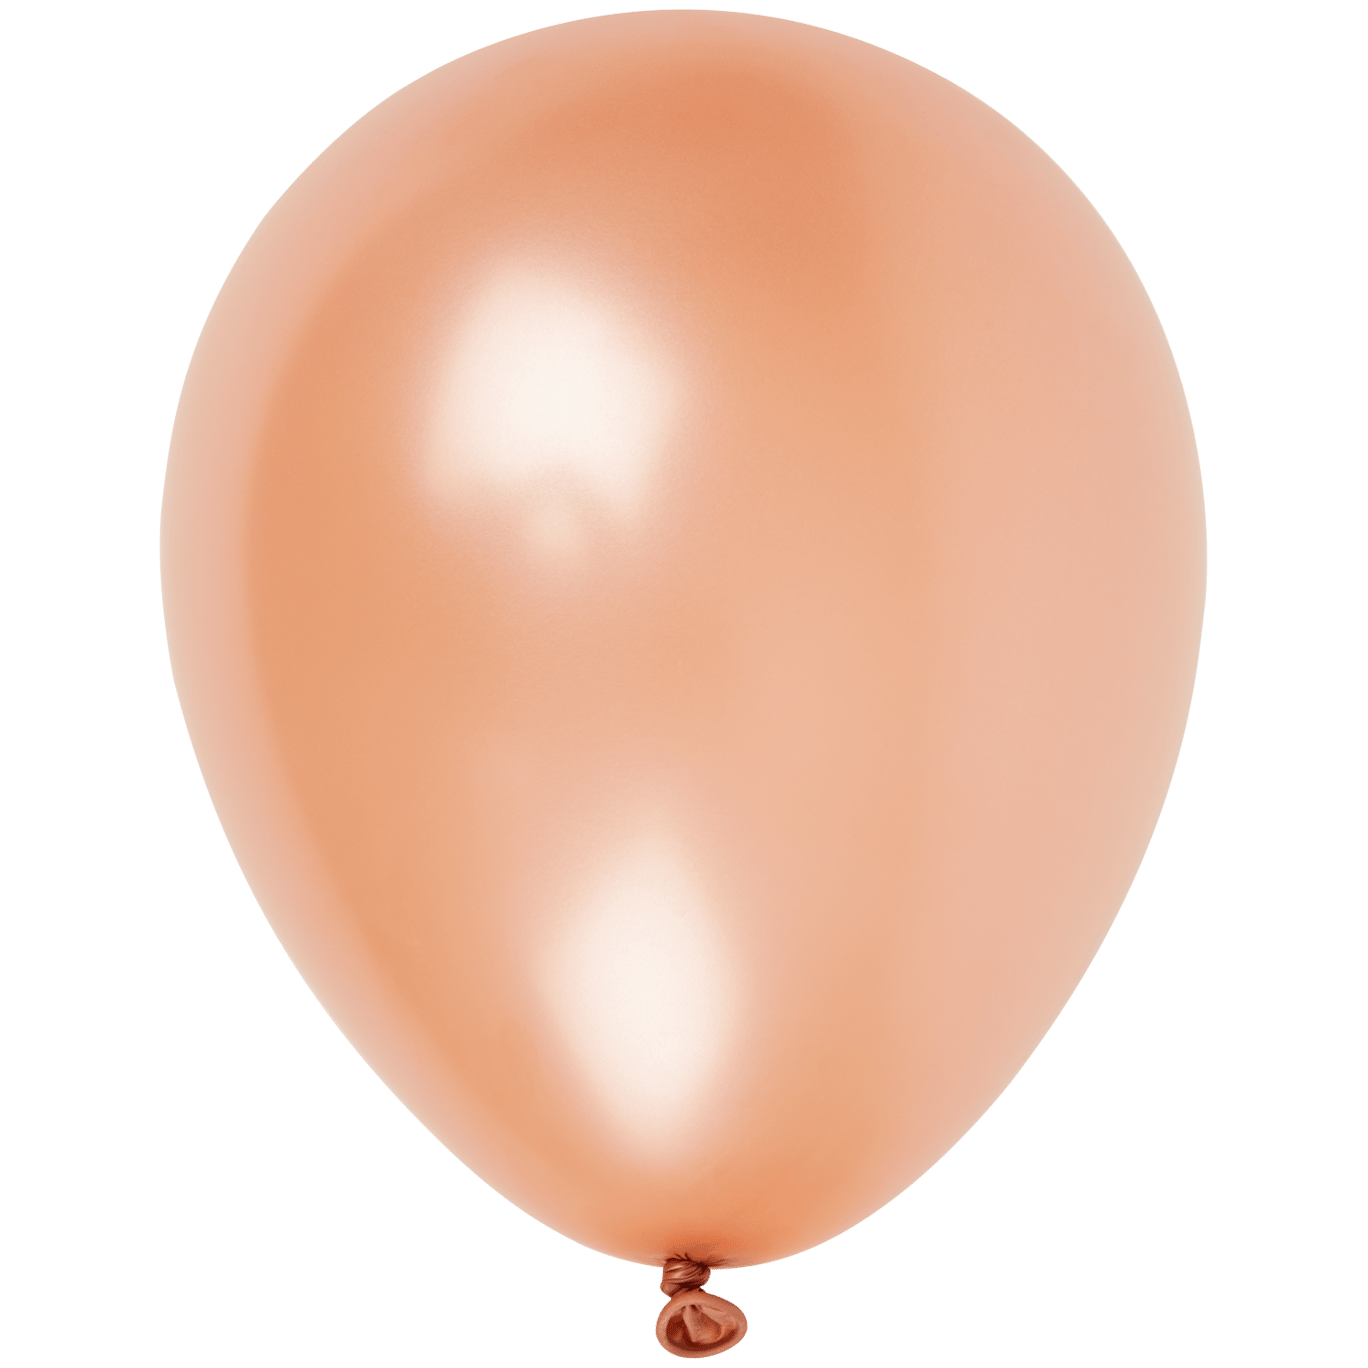 Intentie abces verkenner XL metallic ballon | Action.com